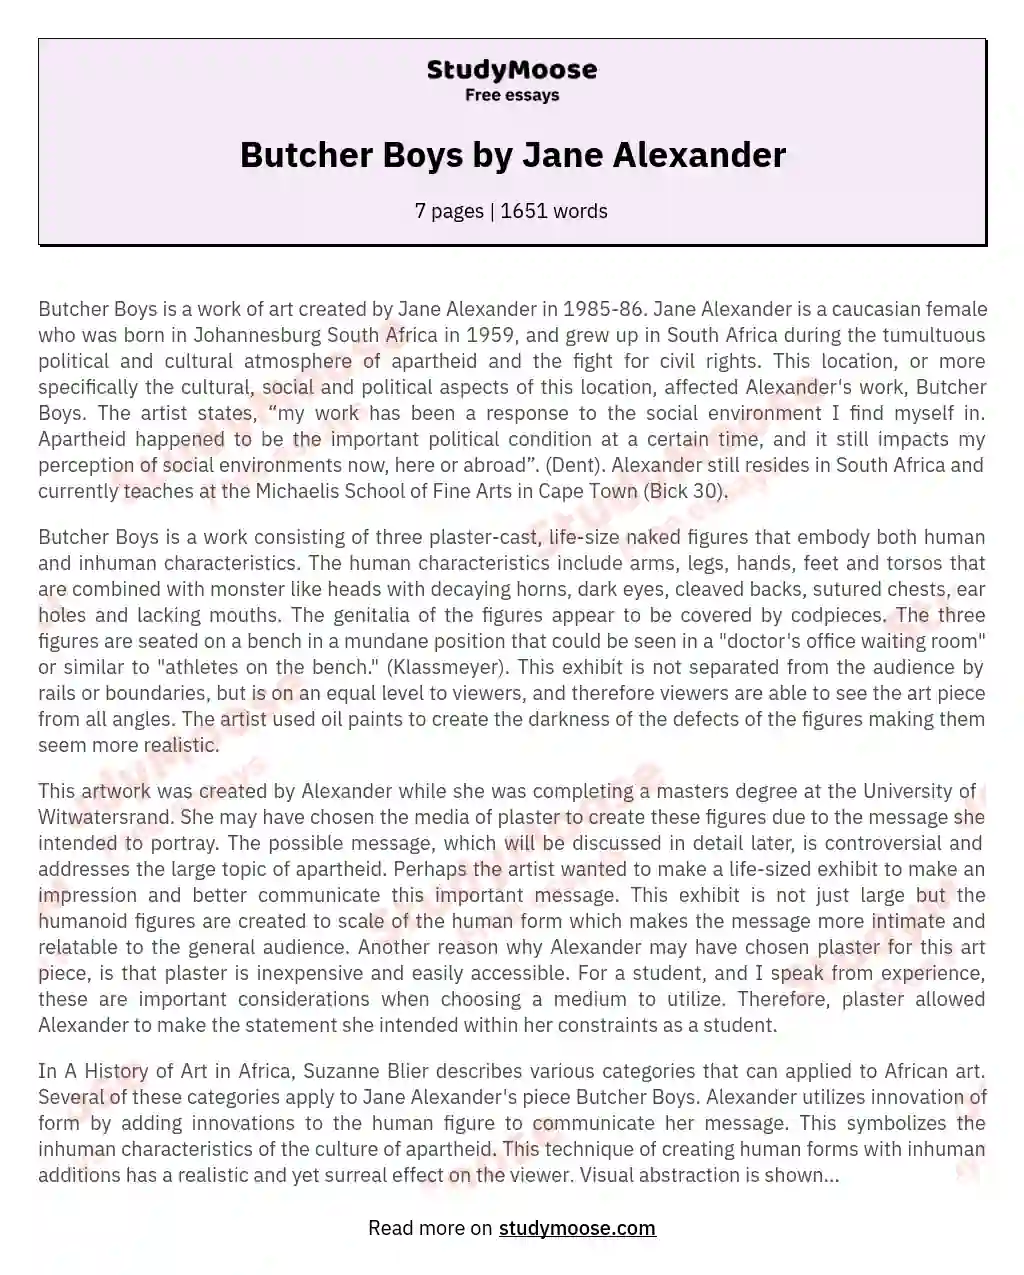 Butcher Boys by Jane Alexander essay